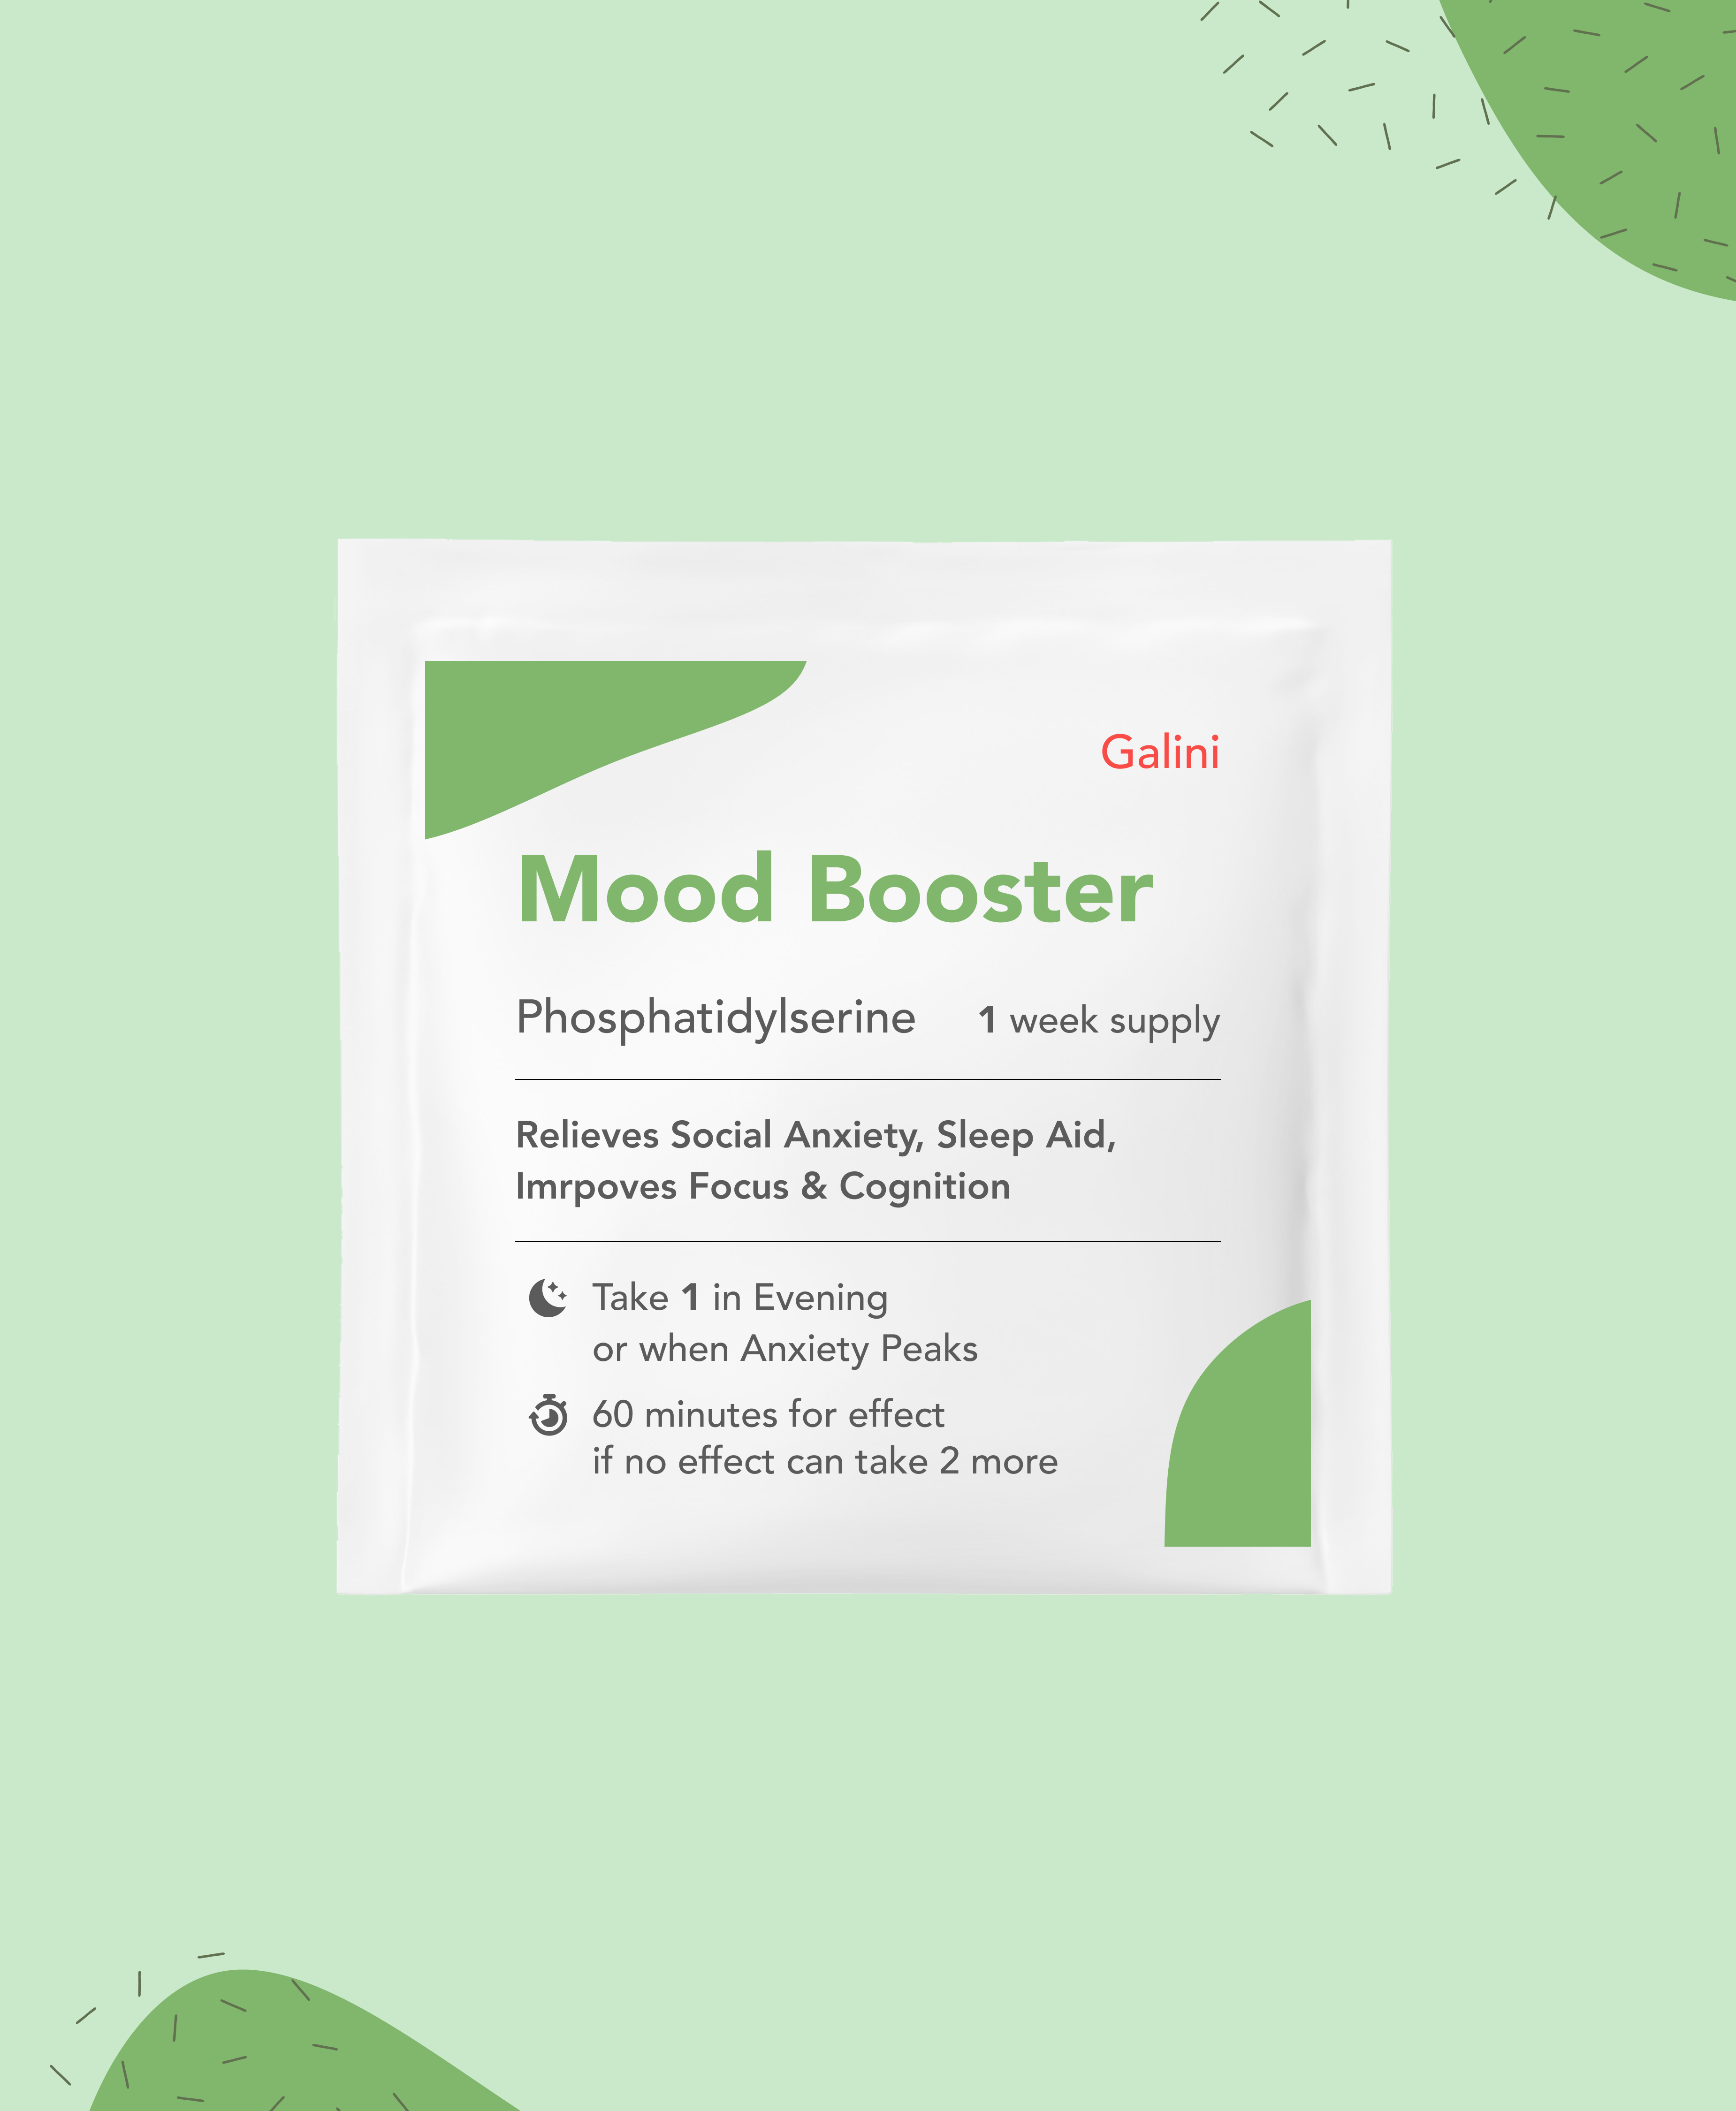 Mood booster supplement containing Phosphatidylserine